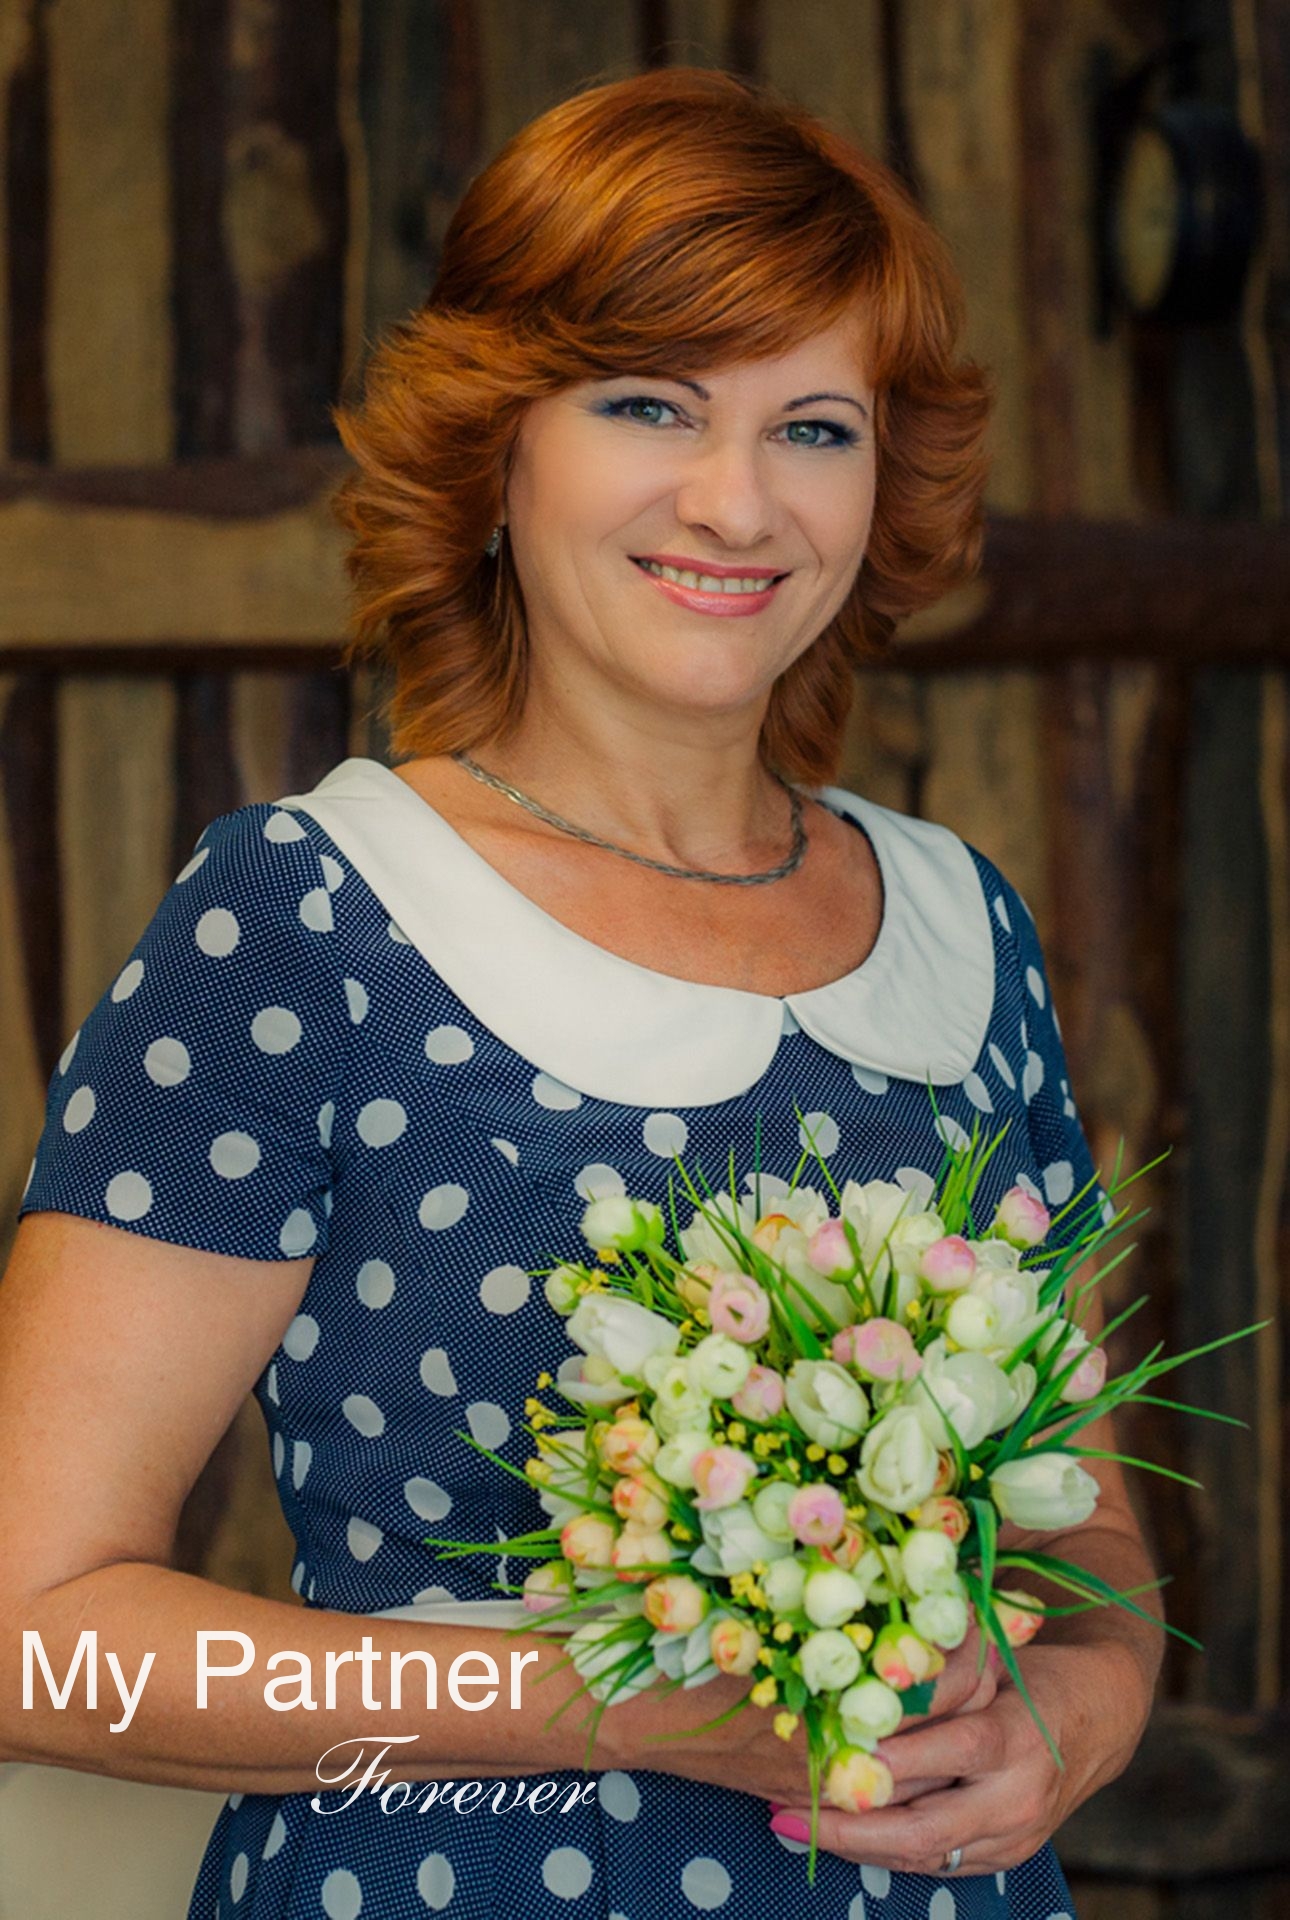 Meet Stunning Ukrainian Woman Raisa from Zaporozhye, Ukraine